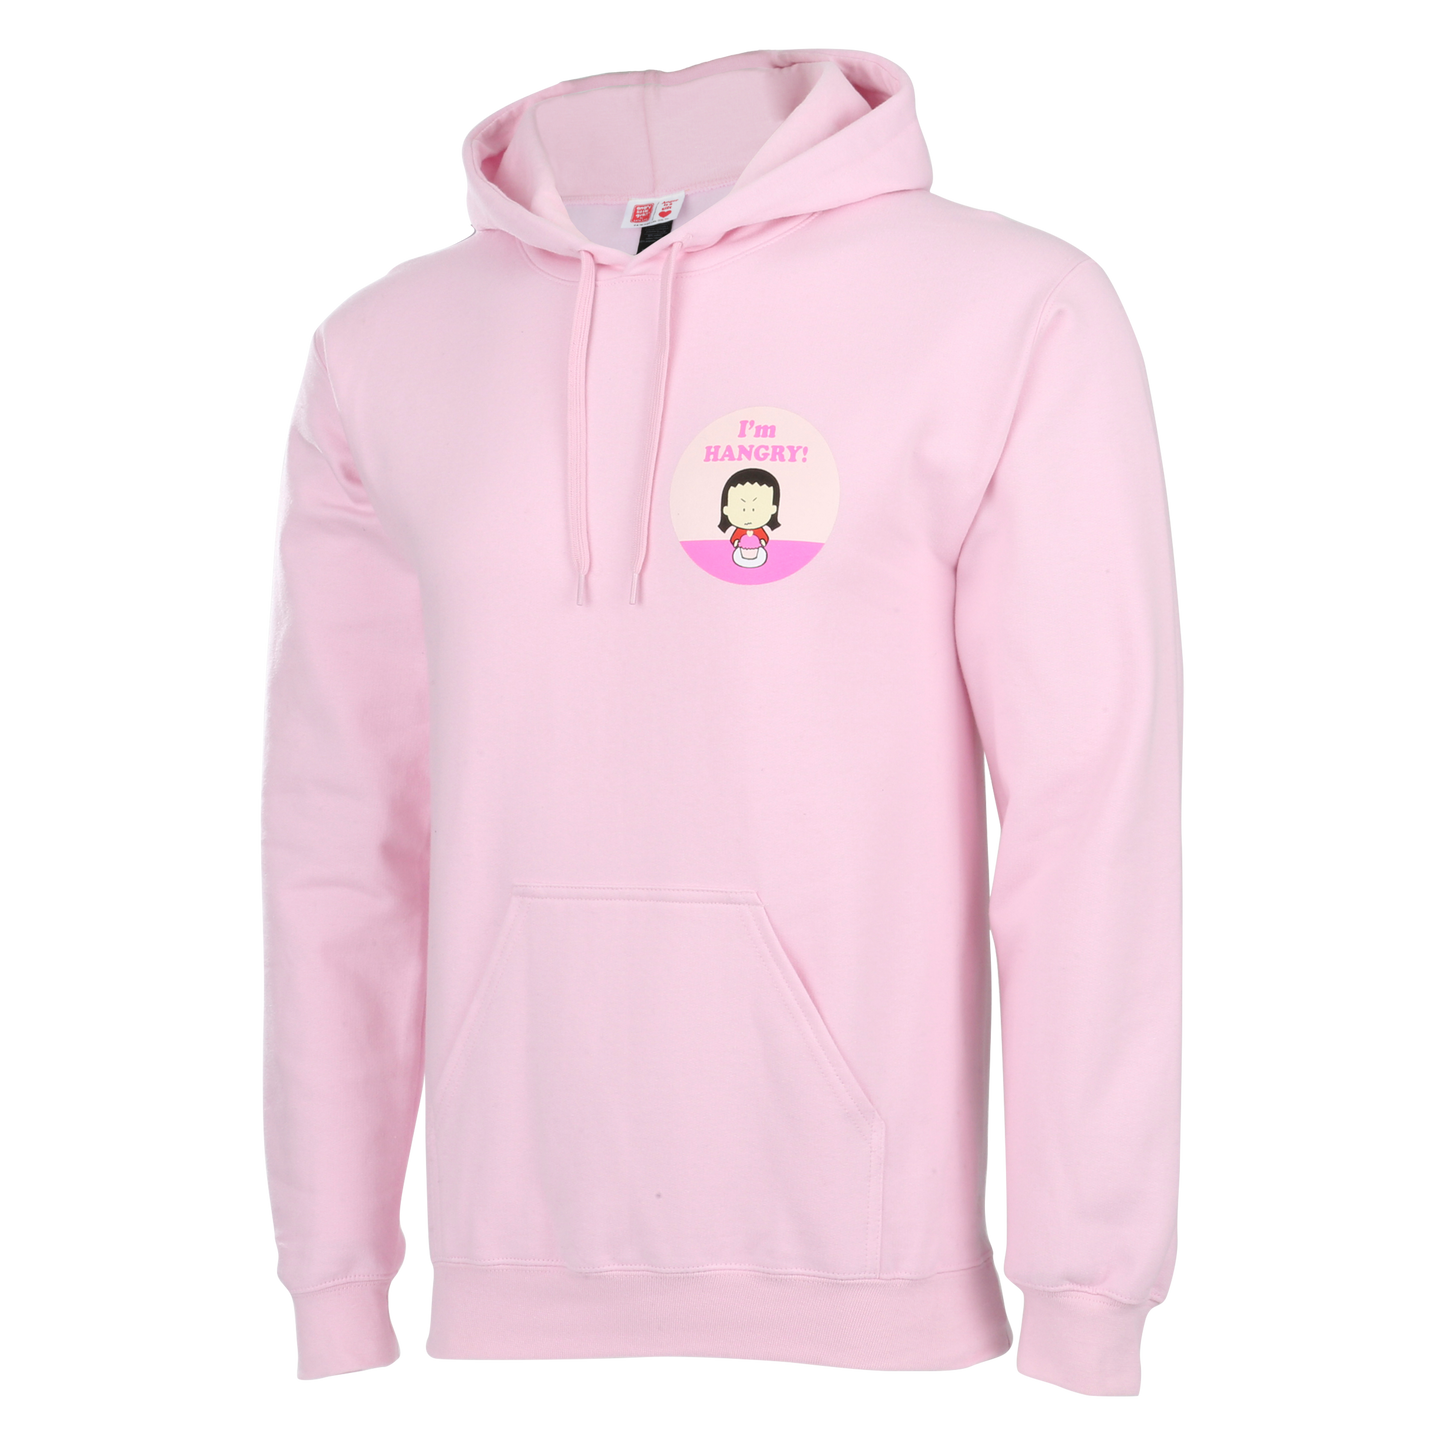 I'm HANGRY! Pink hoodie ADULT sweatshirt